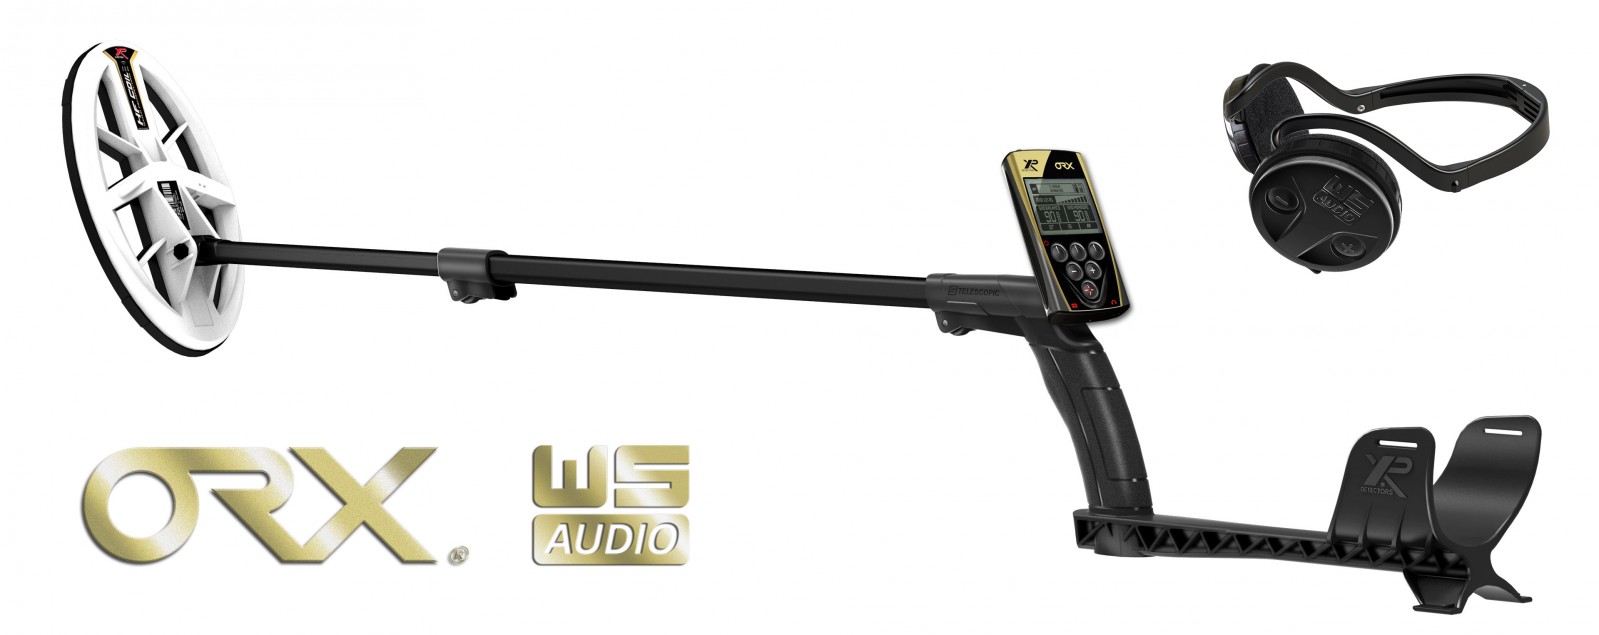 XP ORX HF 13x24 cm RC + bezdrátová sluchátka WSAUDIO - Detektor kovů